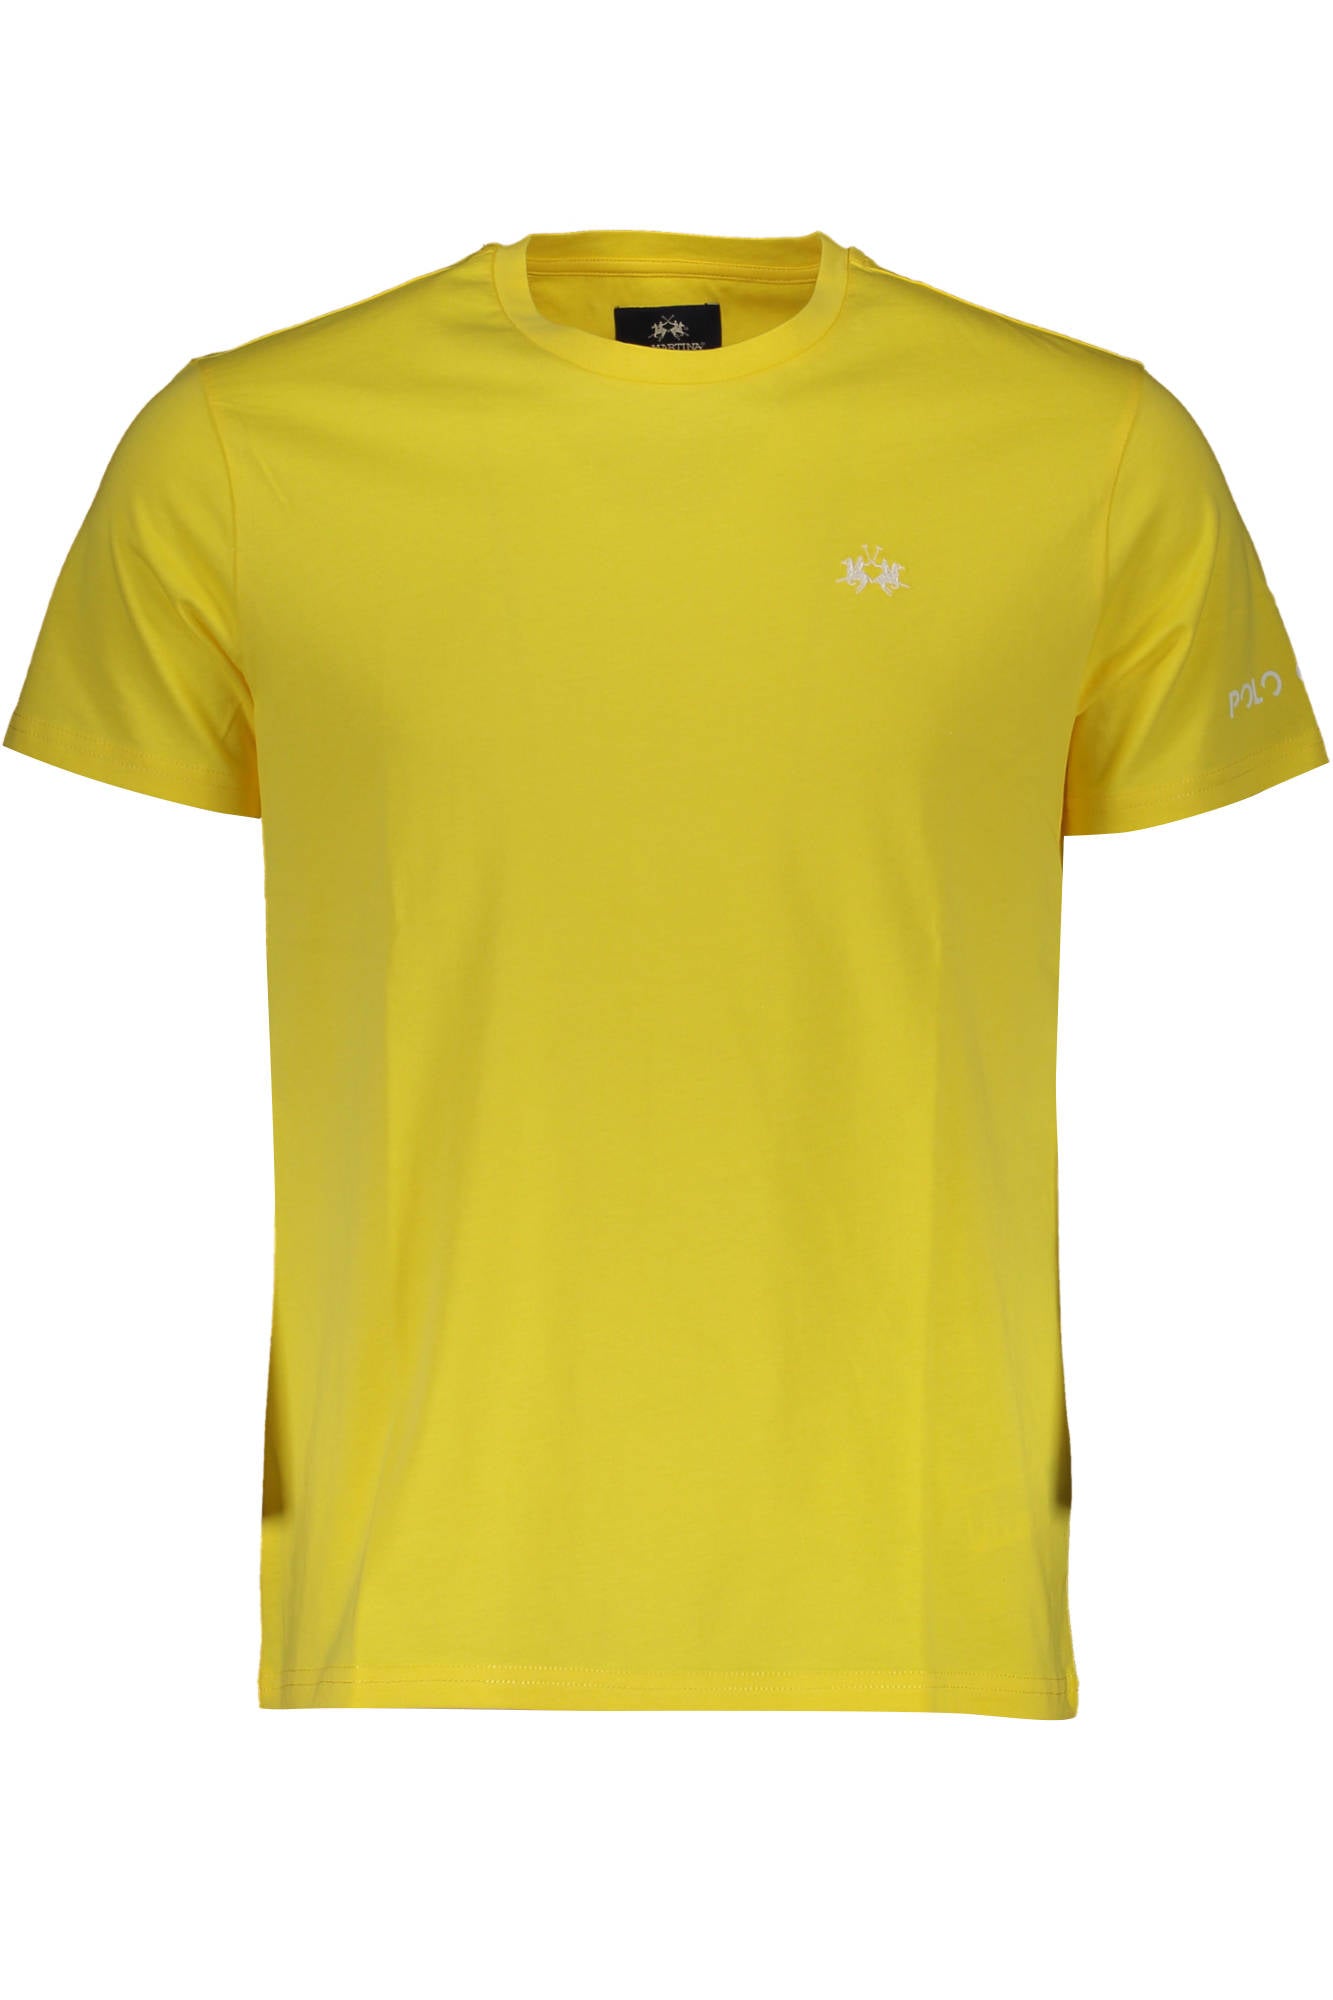 La Martina Yellow T-Shirt - Fizigo